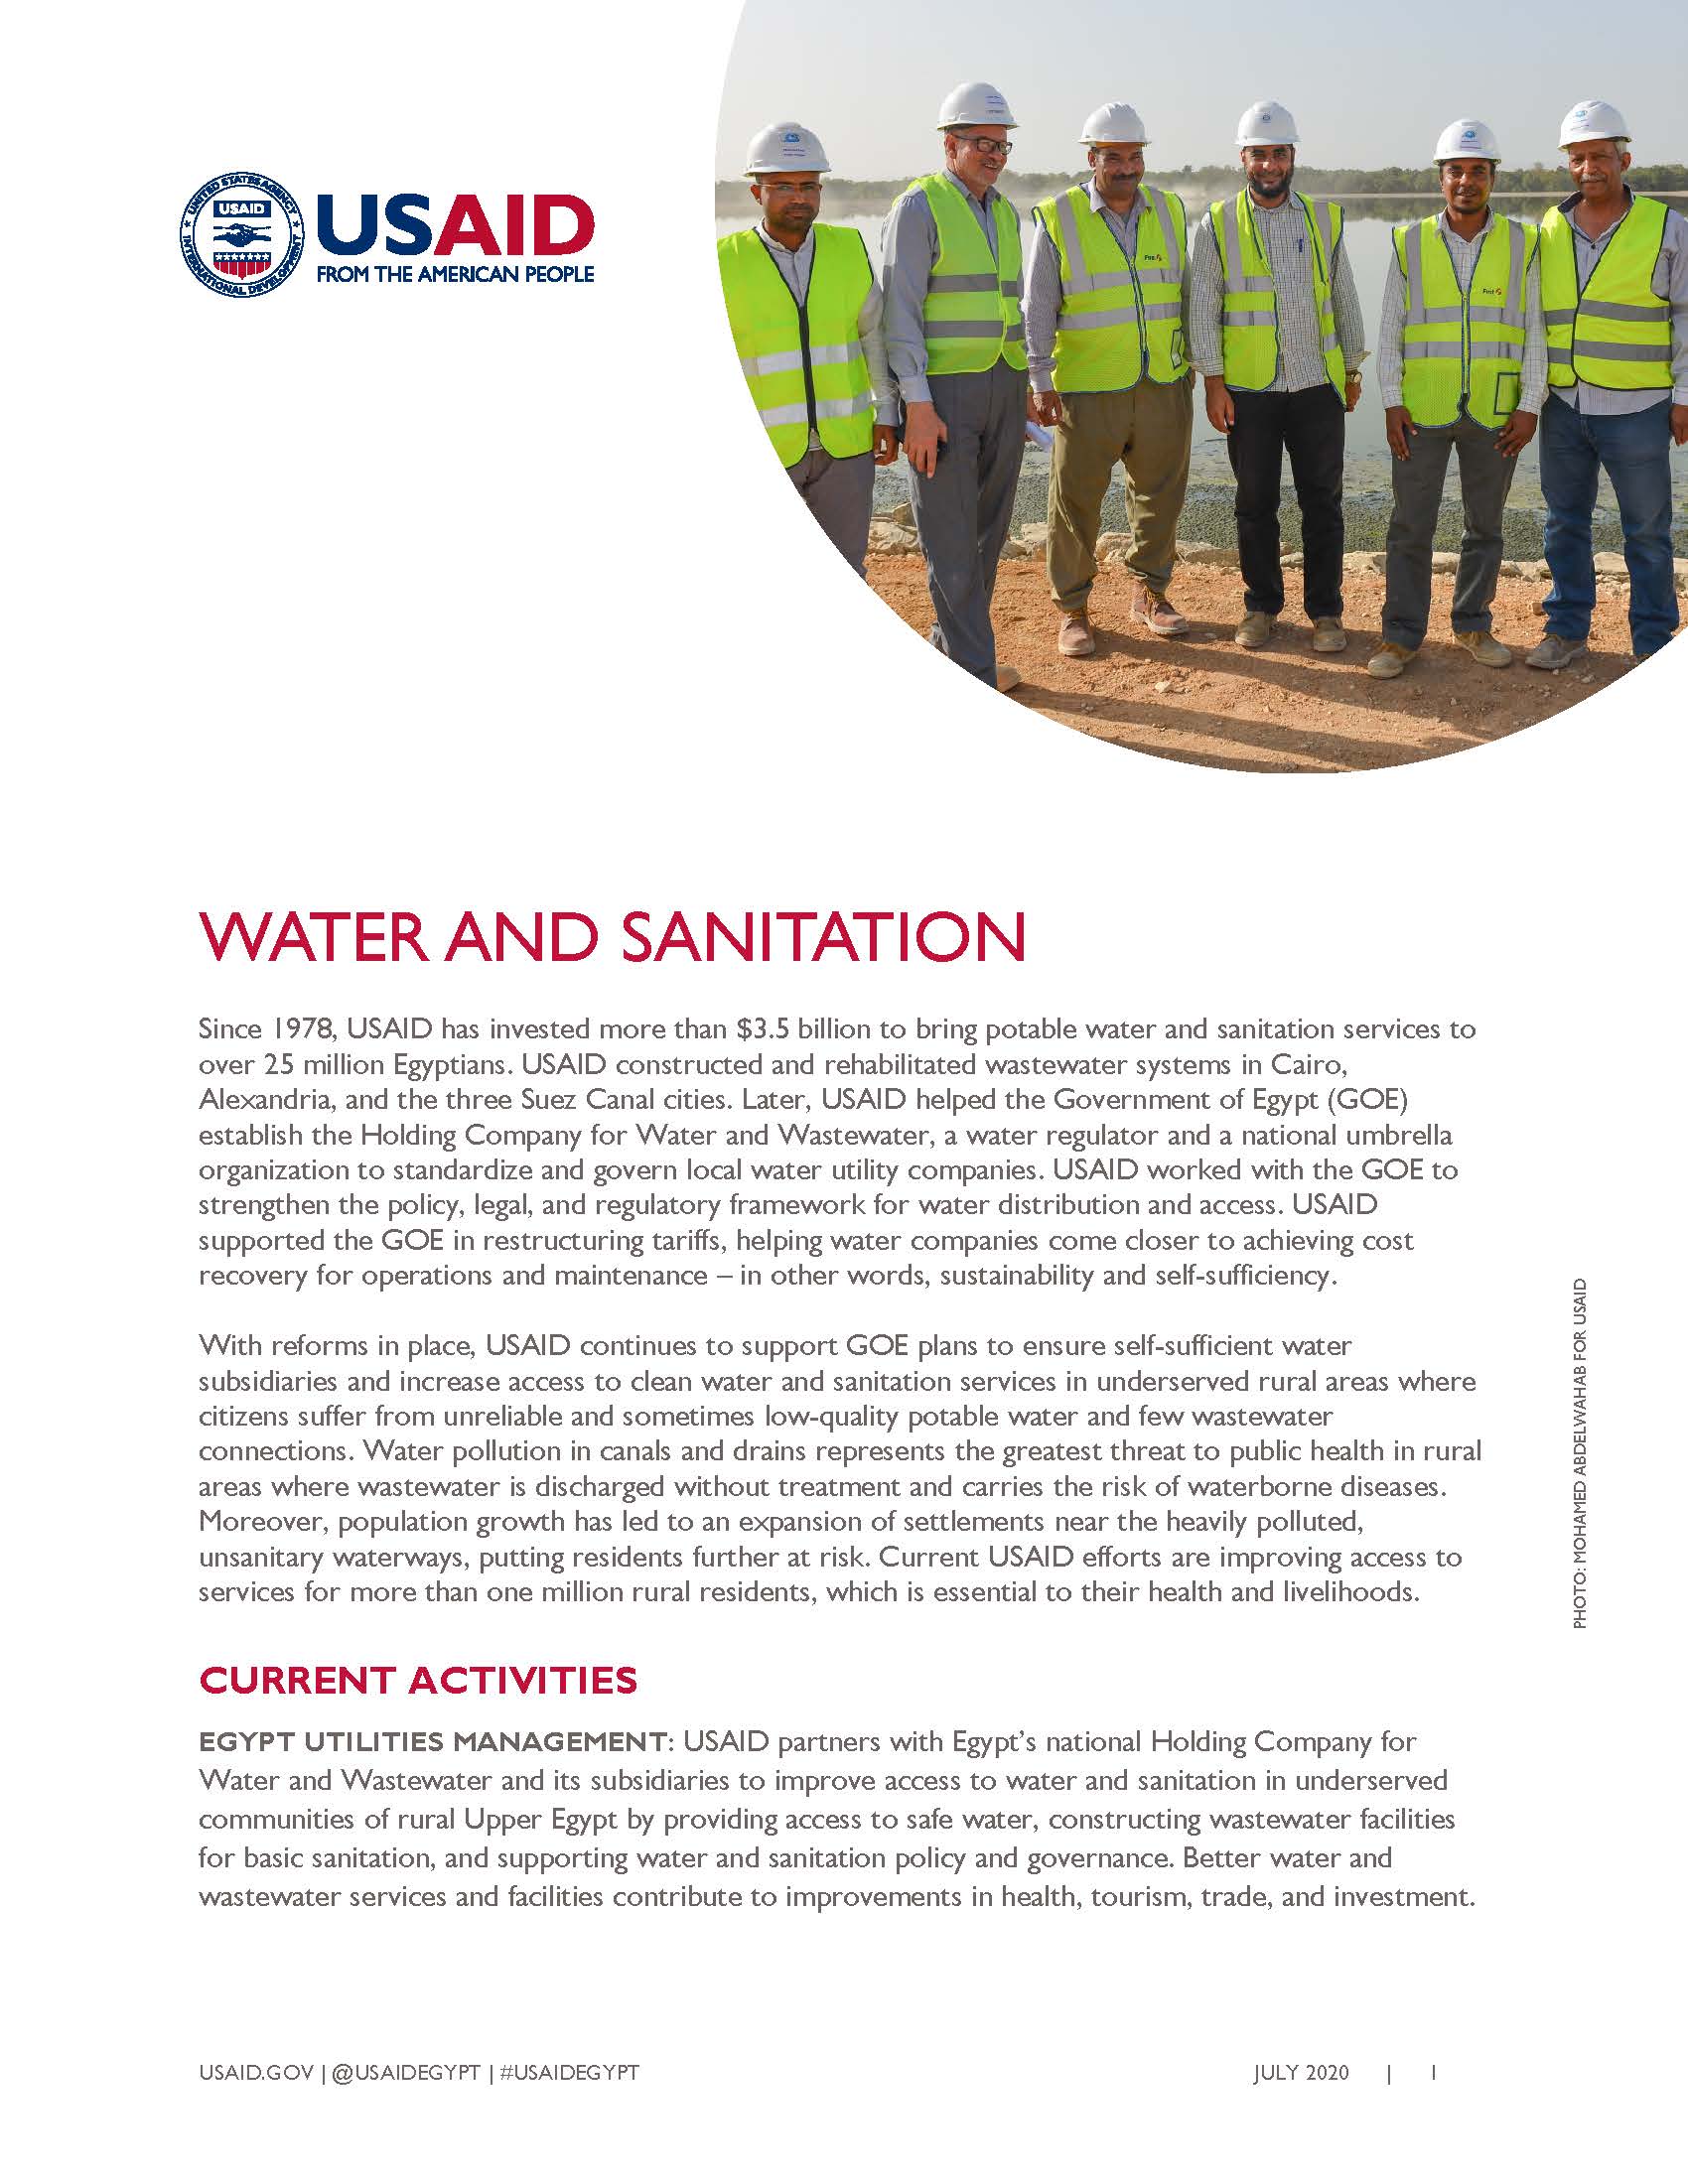 USAID/Egypt Fact Sheet: Water and Sanitation